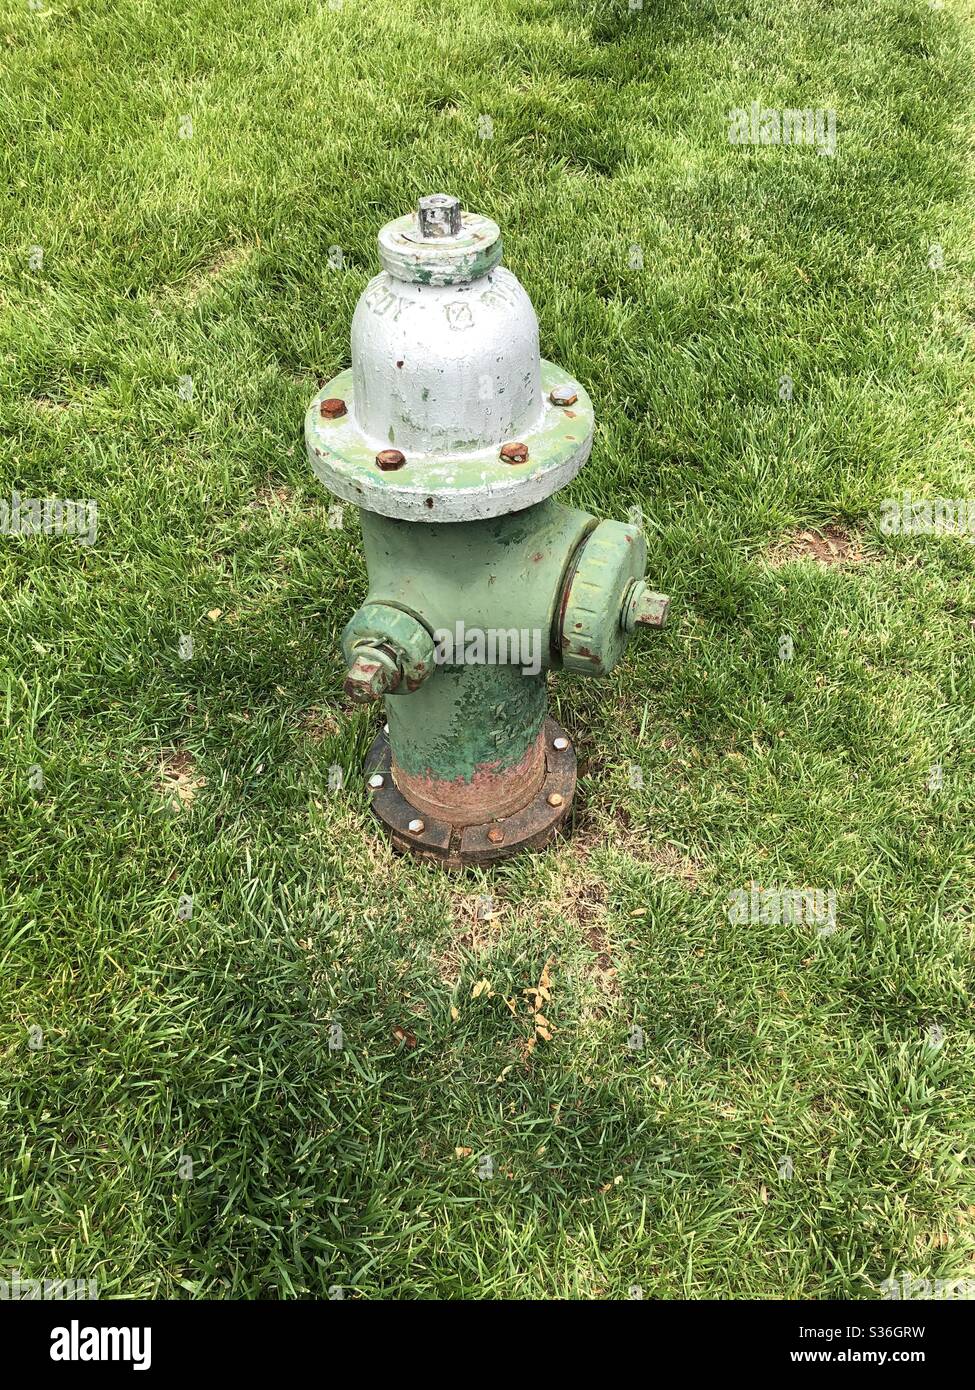 Green fire hydrant Stock Photo